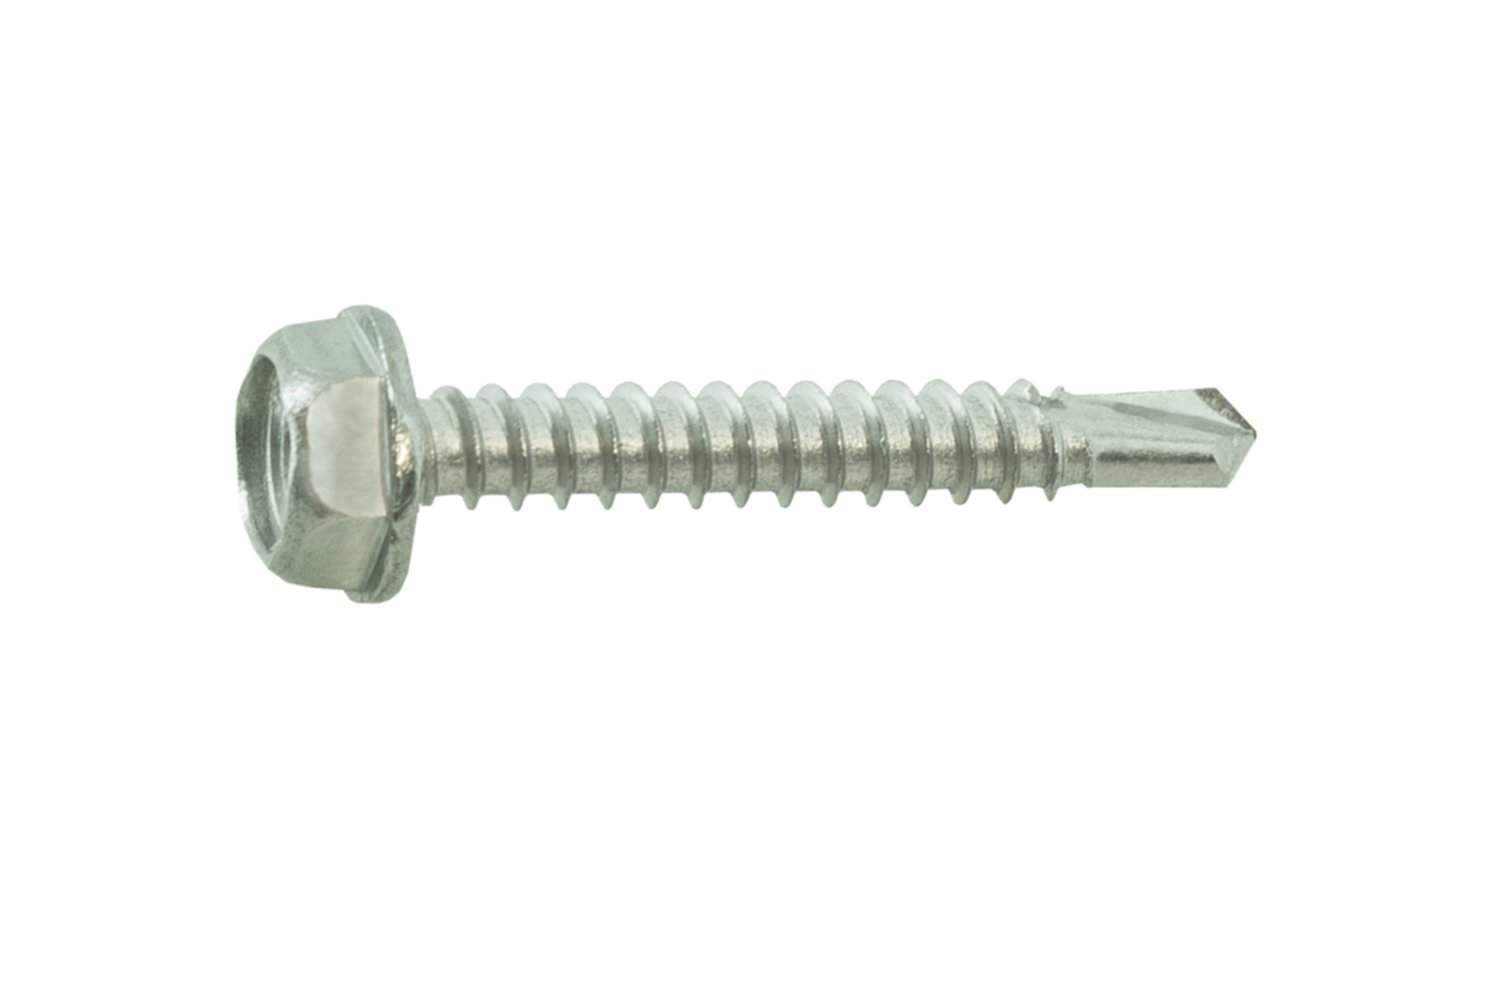 A4 stainless steel 4.8x38 self-drilling hexagon-head sheet metal screws, 9 pcs.